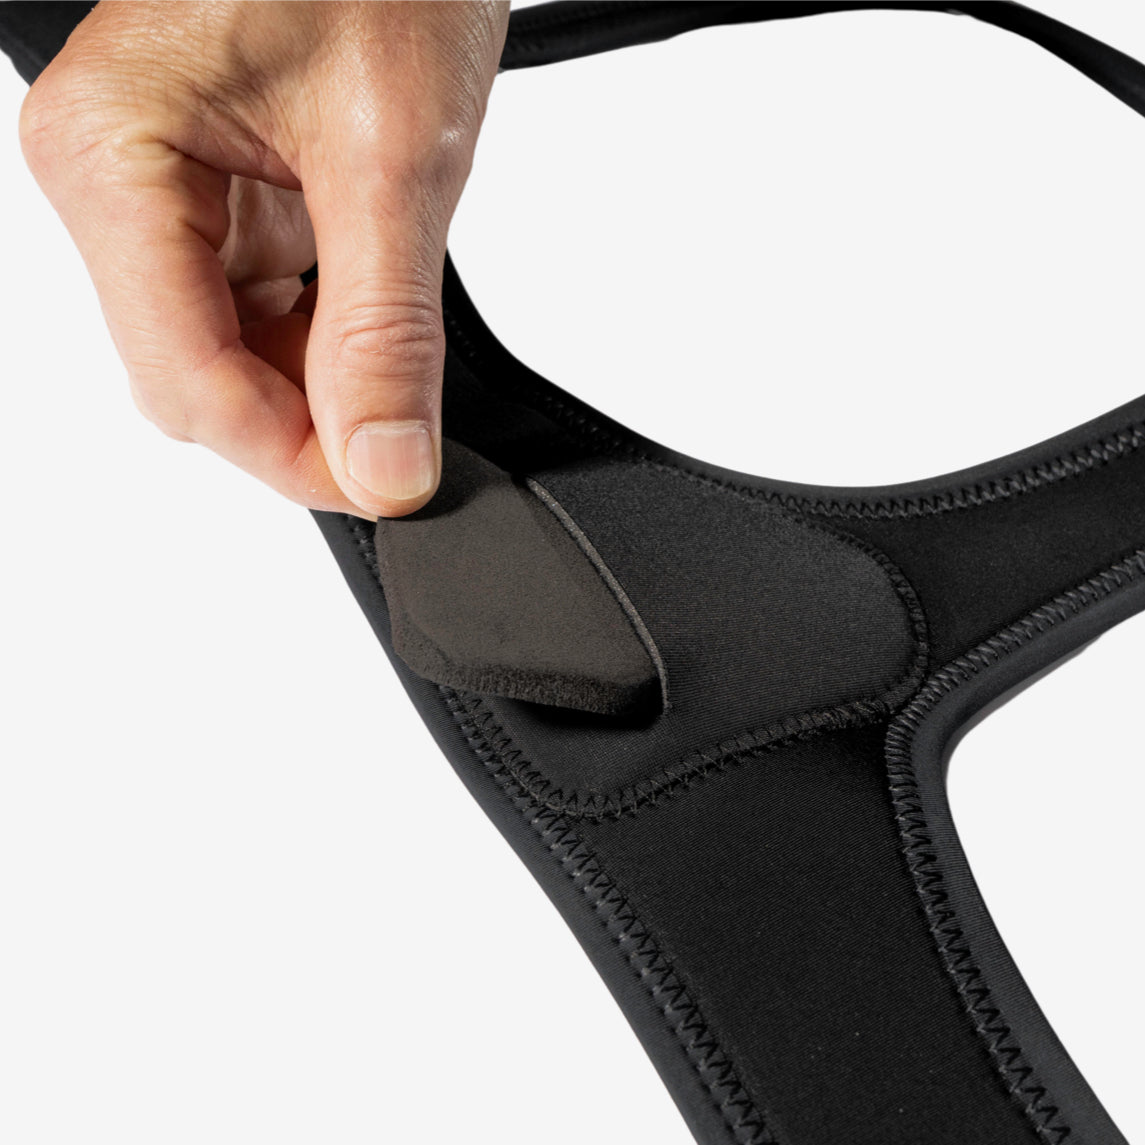 Hand showing the minimalist single hernia belt pad is interchangeable